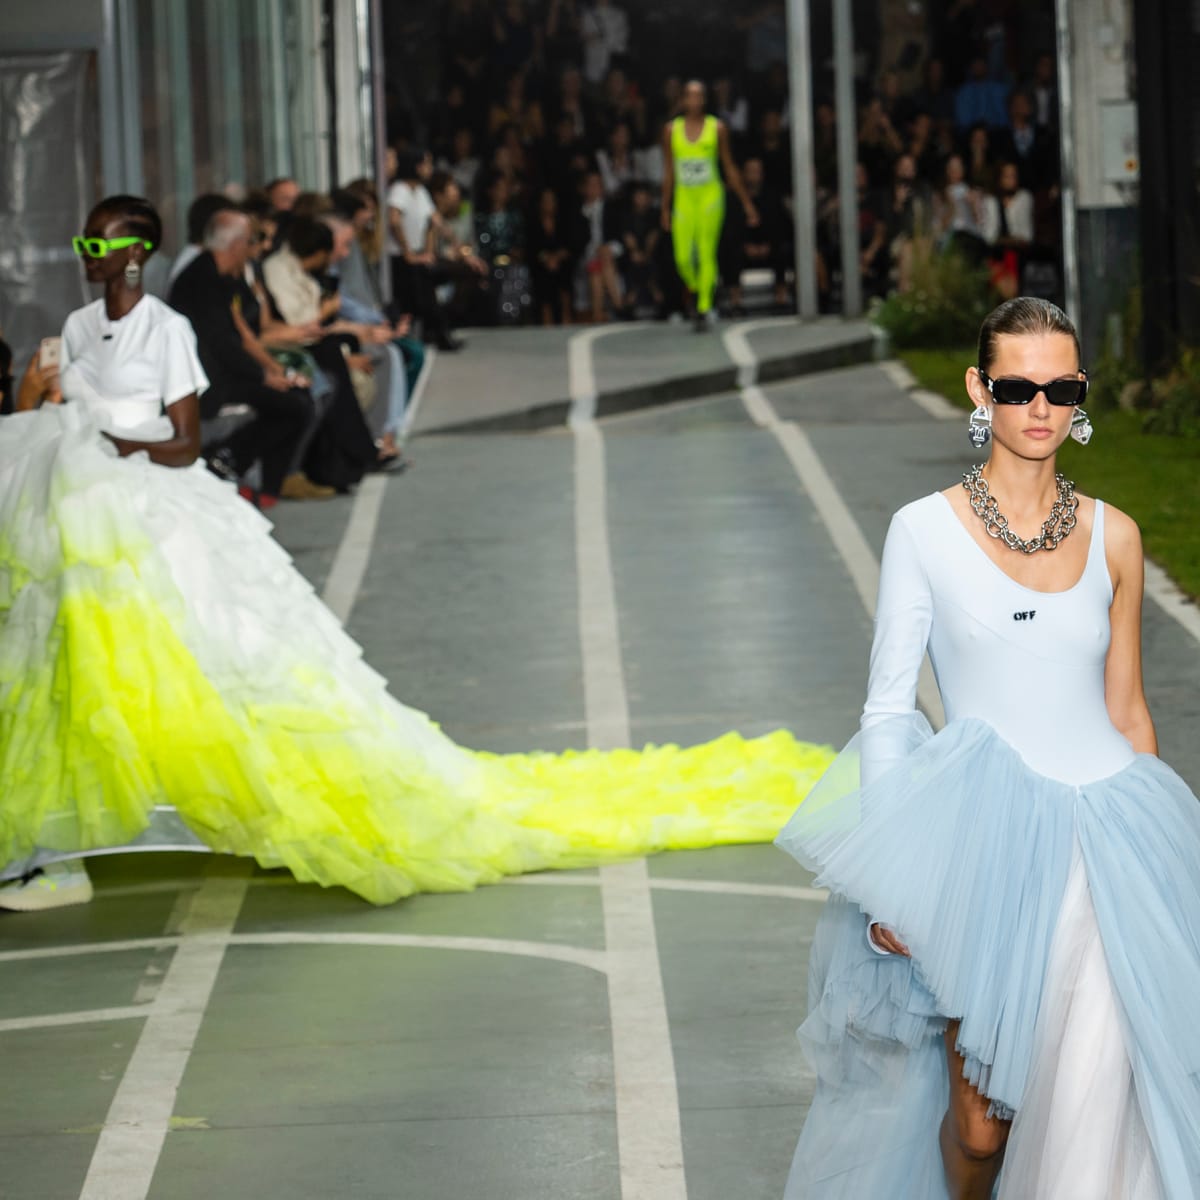 Off-White Balenciaga Gucci as World's Fashion Brand - Fashionista